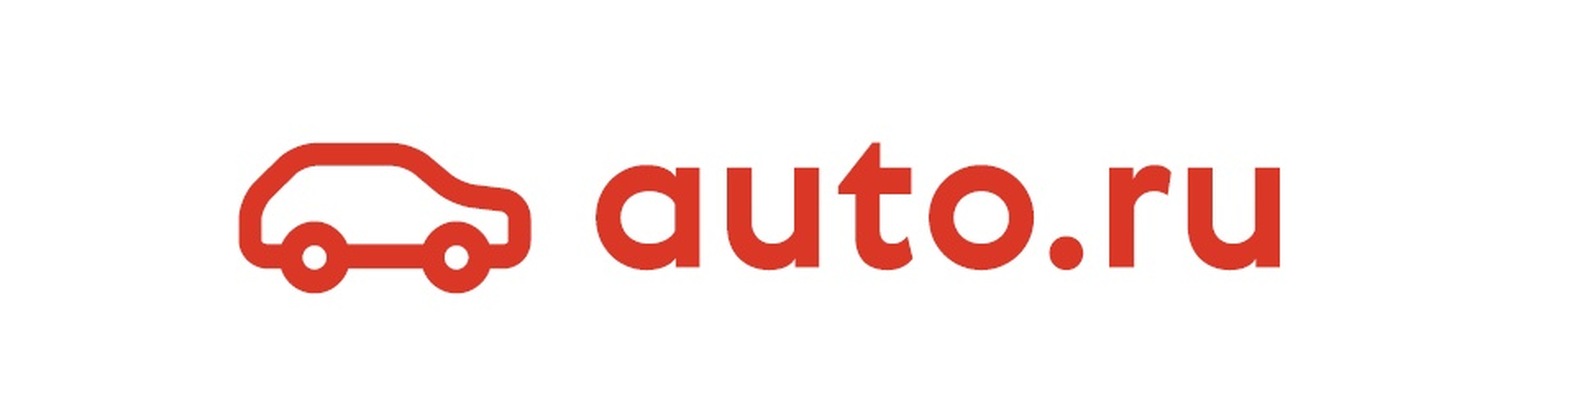 Autoru. Авто ру логотип. Авто.ru. Auto.ru. Автору.